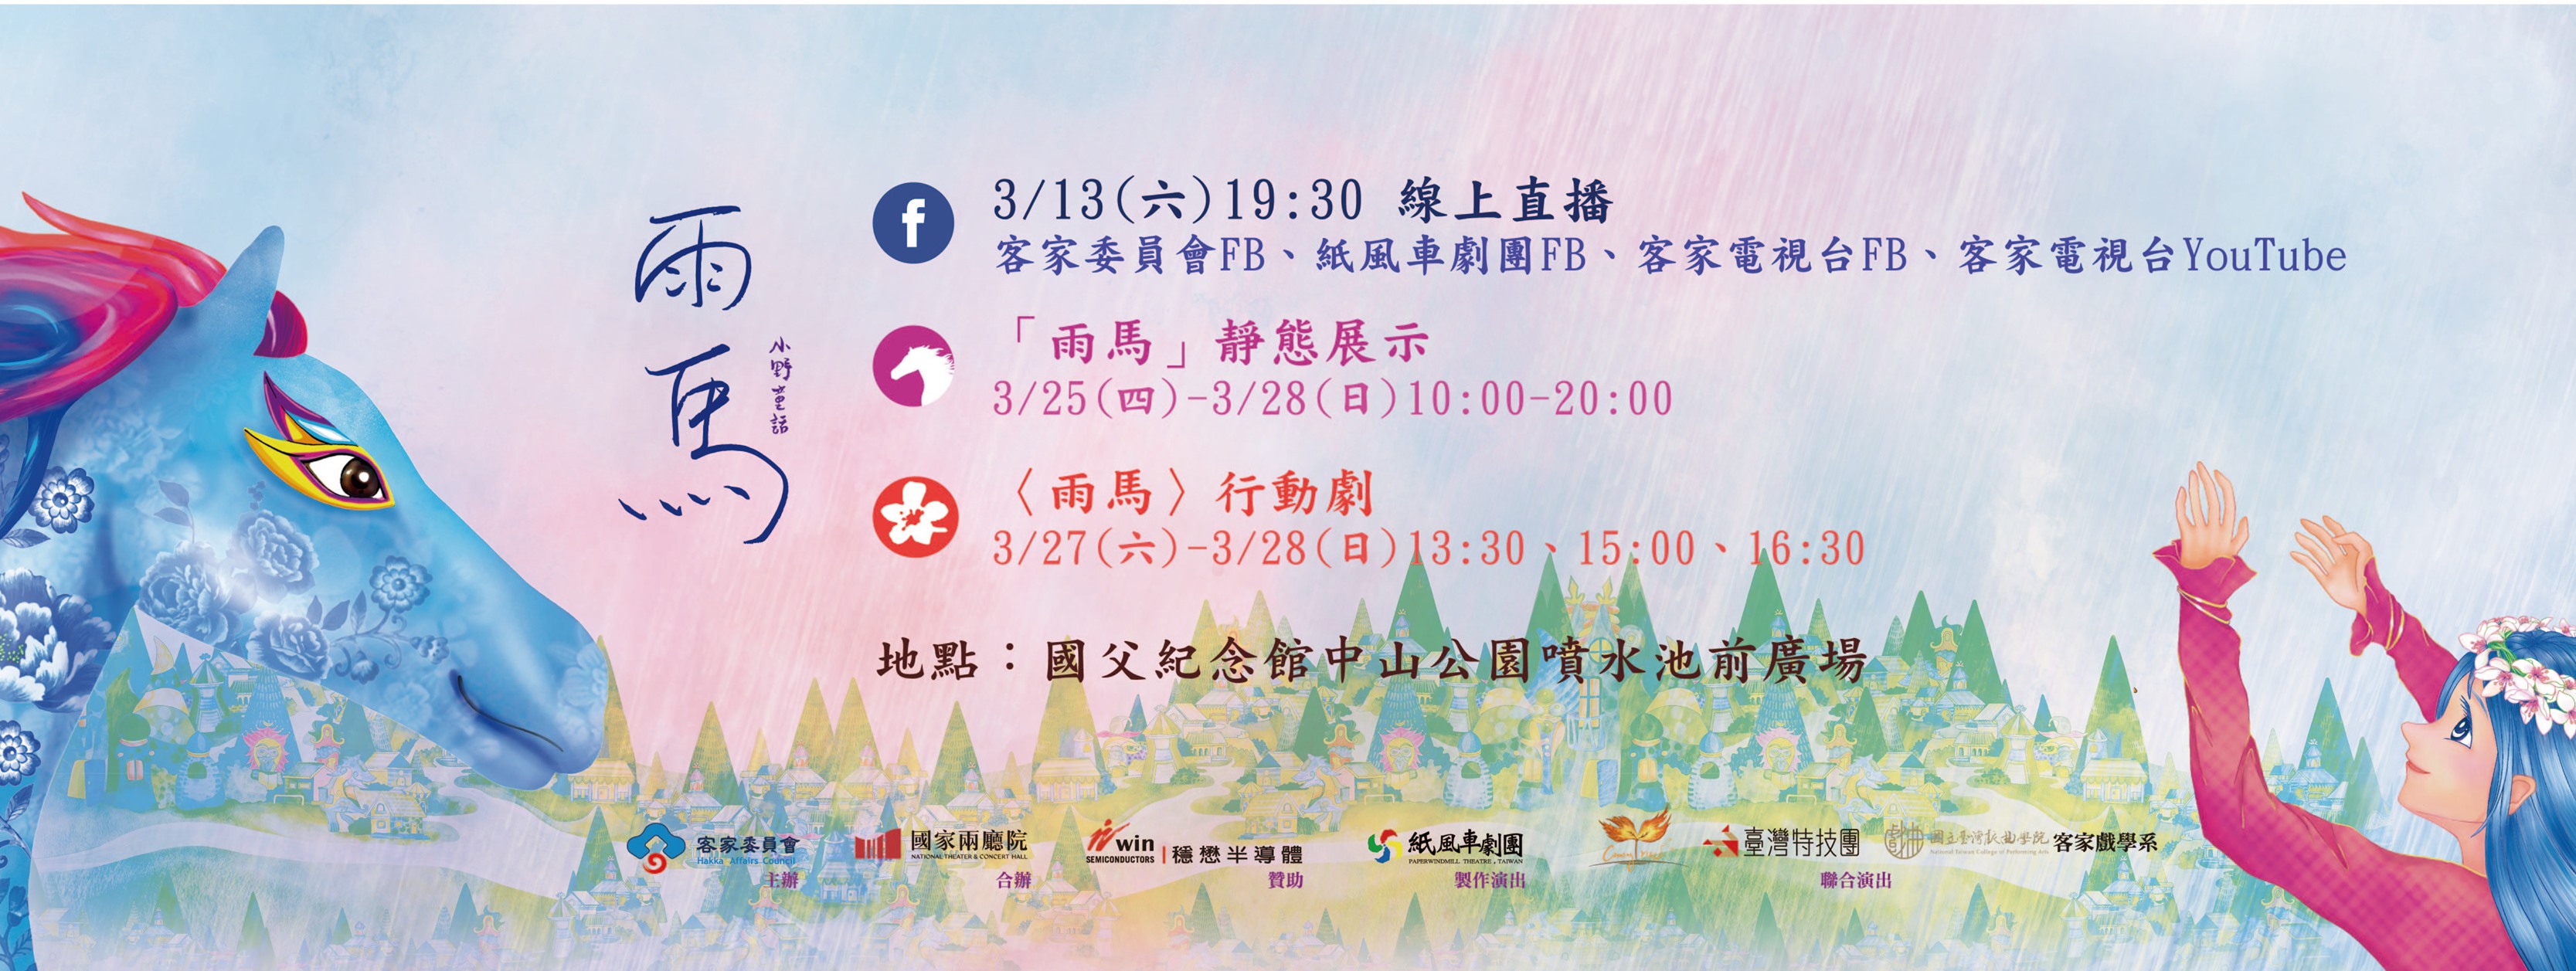 Hakka theatre ‘Rain Horse’ impresses audience across Taiwan 展示圖